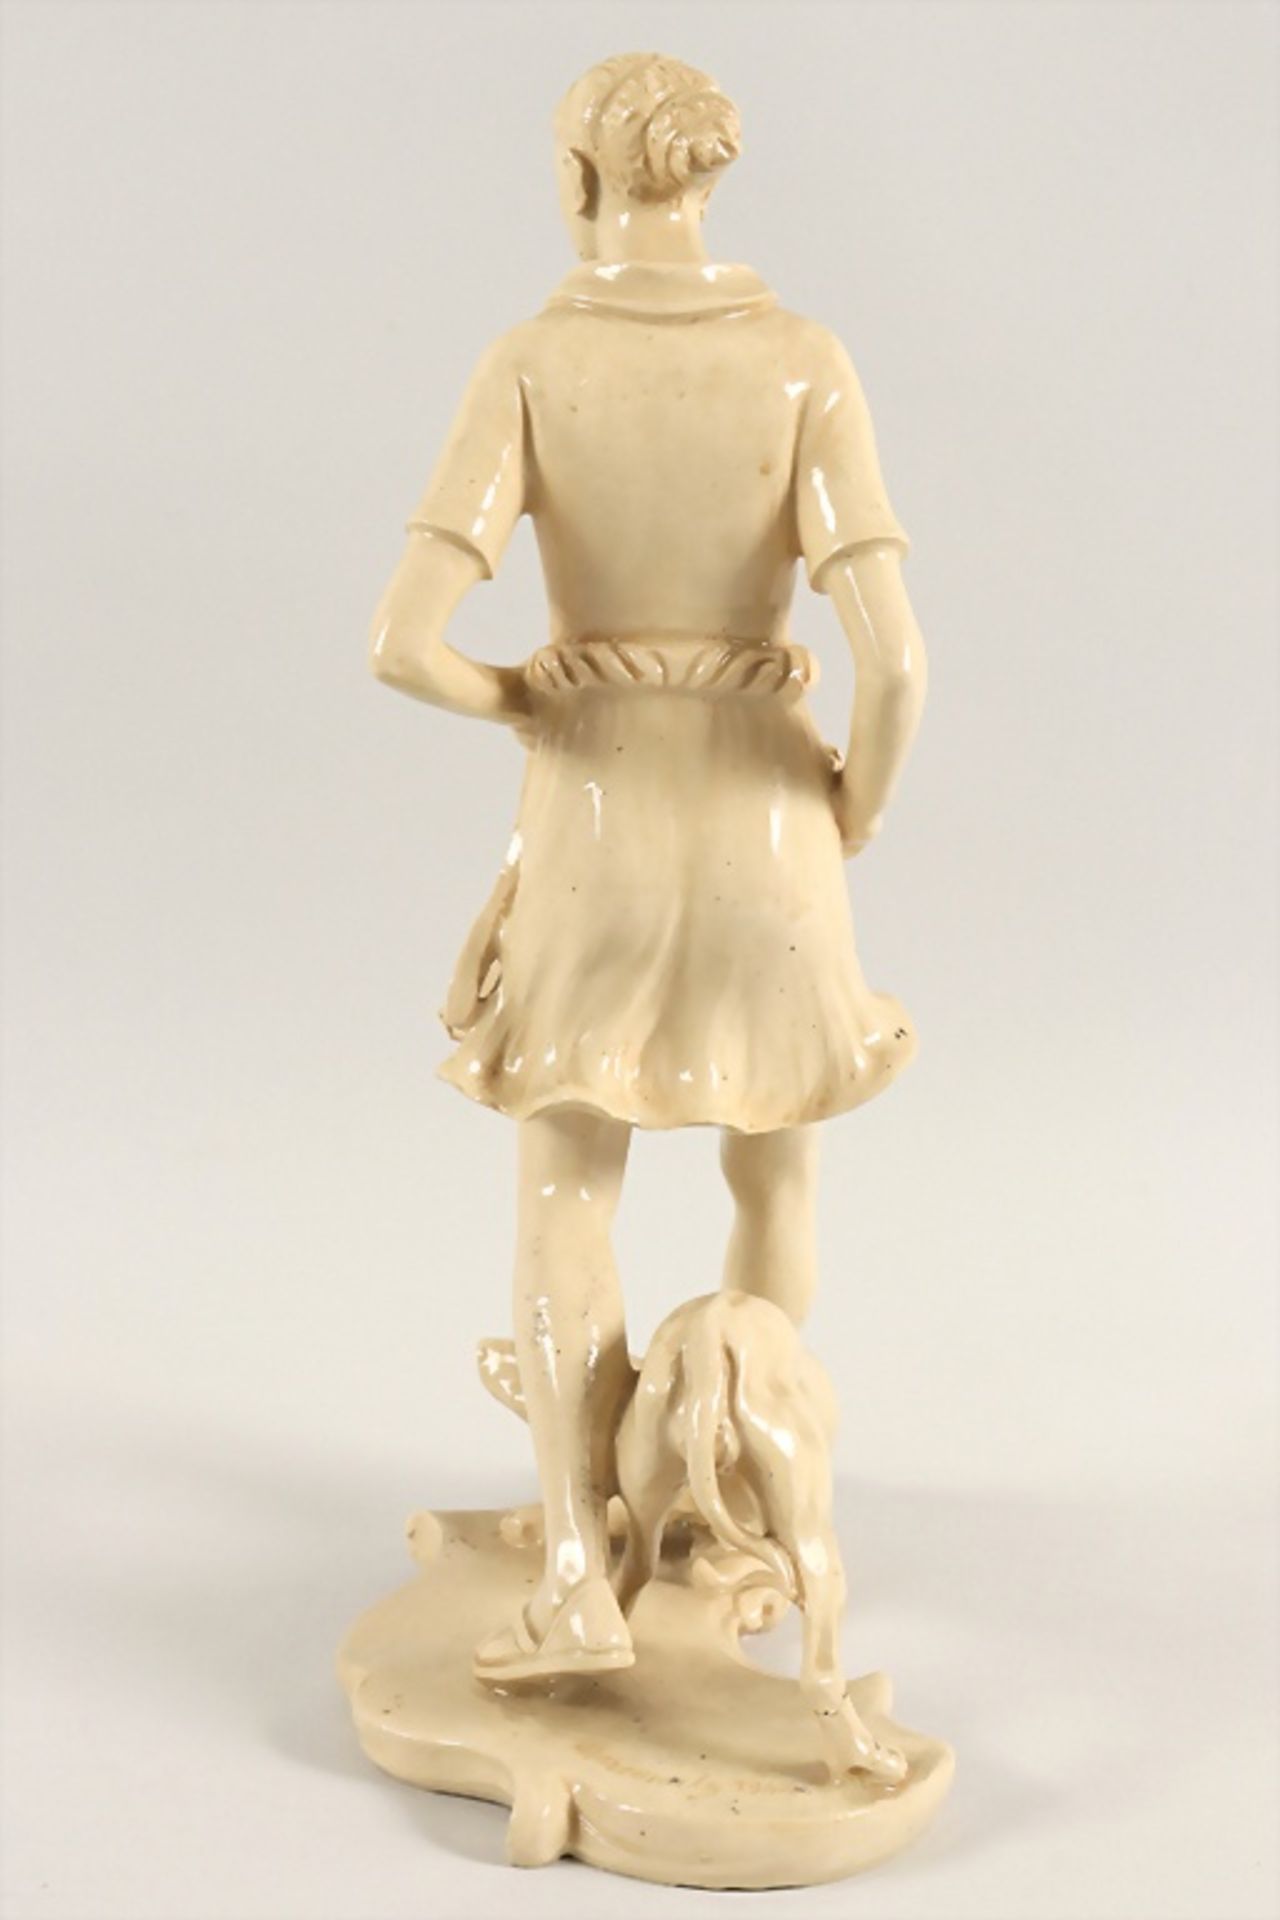 Art Déco Steinzeug Figur 'Diana' / An Art Deco stone ware figure 'Diana', 1946 - Image 4 of 8